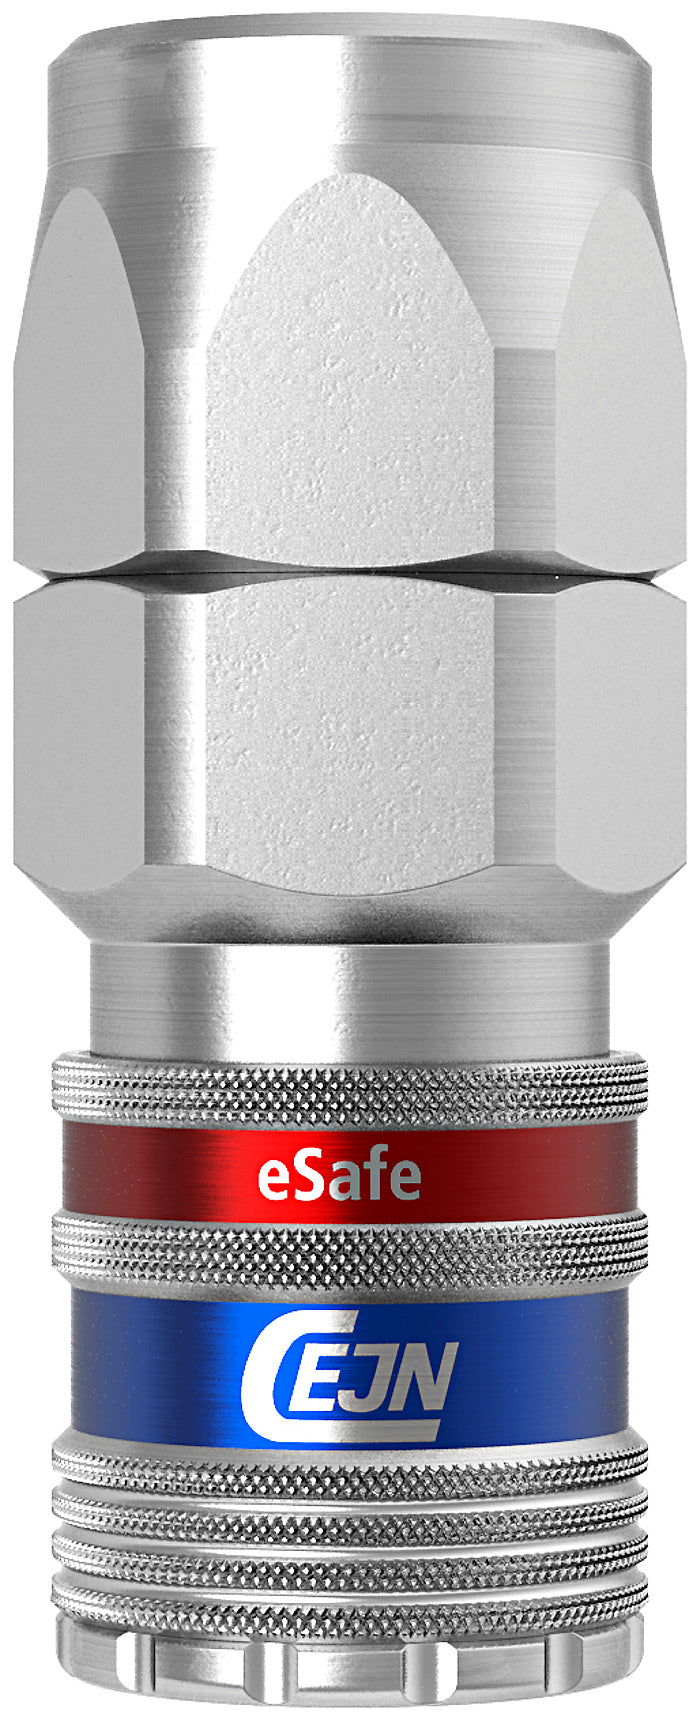 Cejn 10-310-5003 Series 310 DN 5.3 eSafe Hose Connection Nipple 8 mm (5/16‚Äö√Ñ√π), 16 Bar